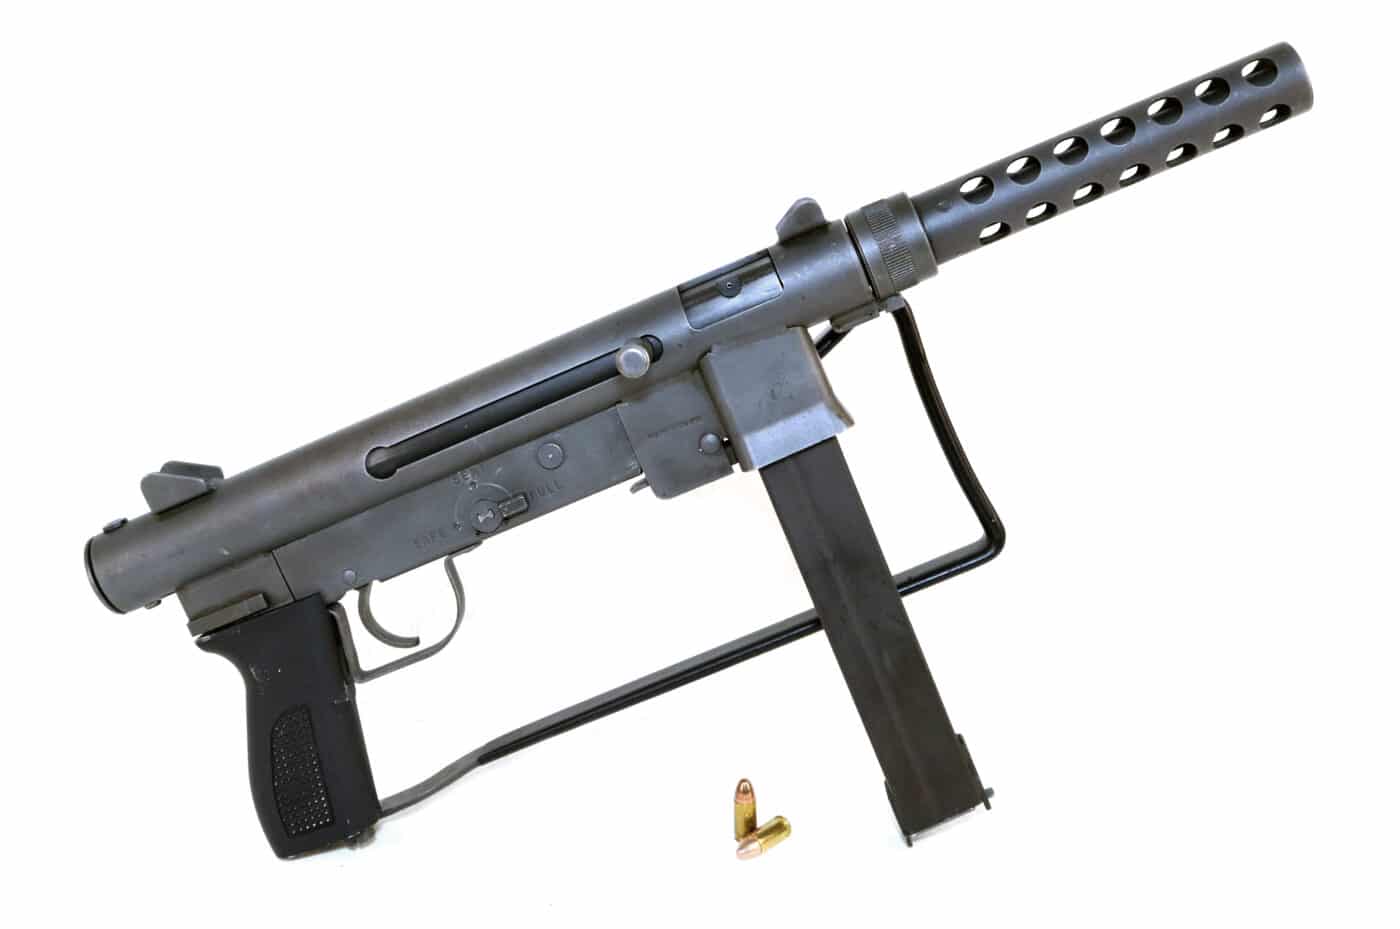 M76 submachine gun with stock folded